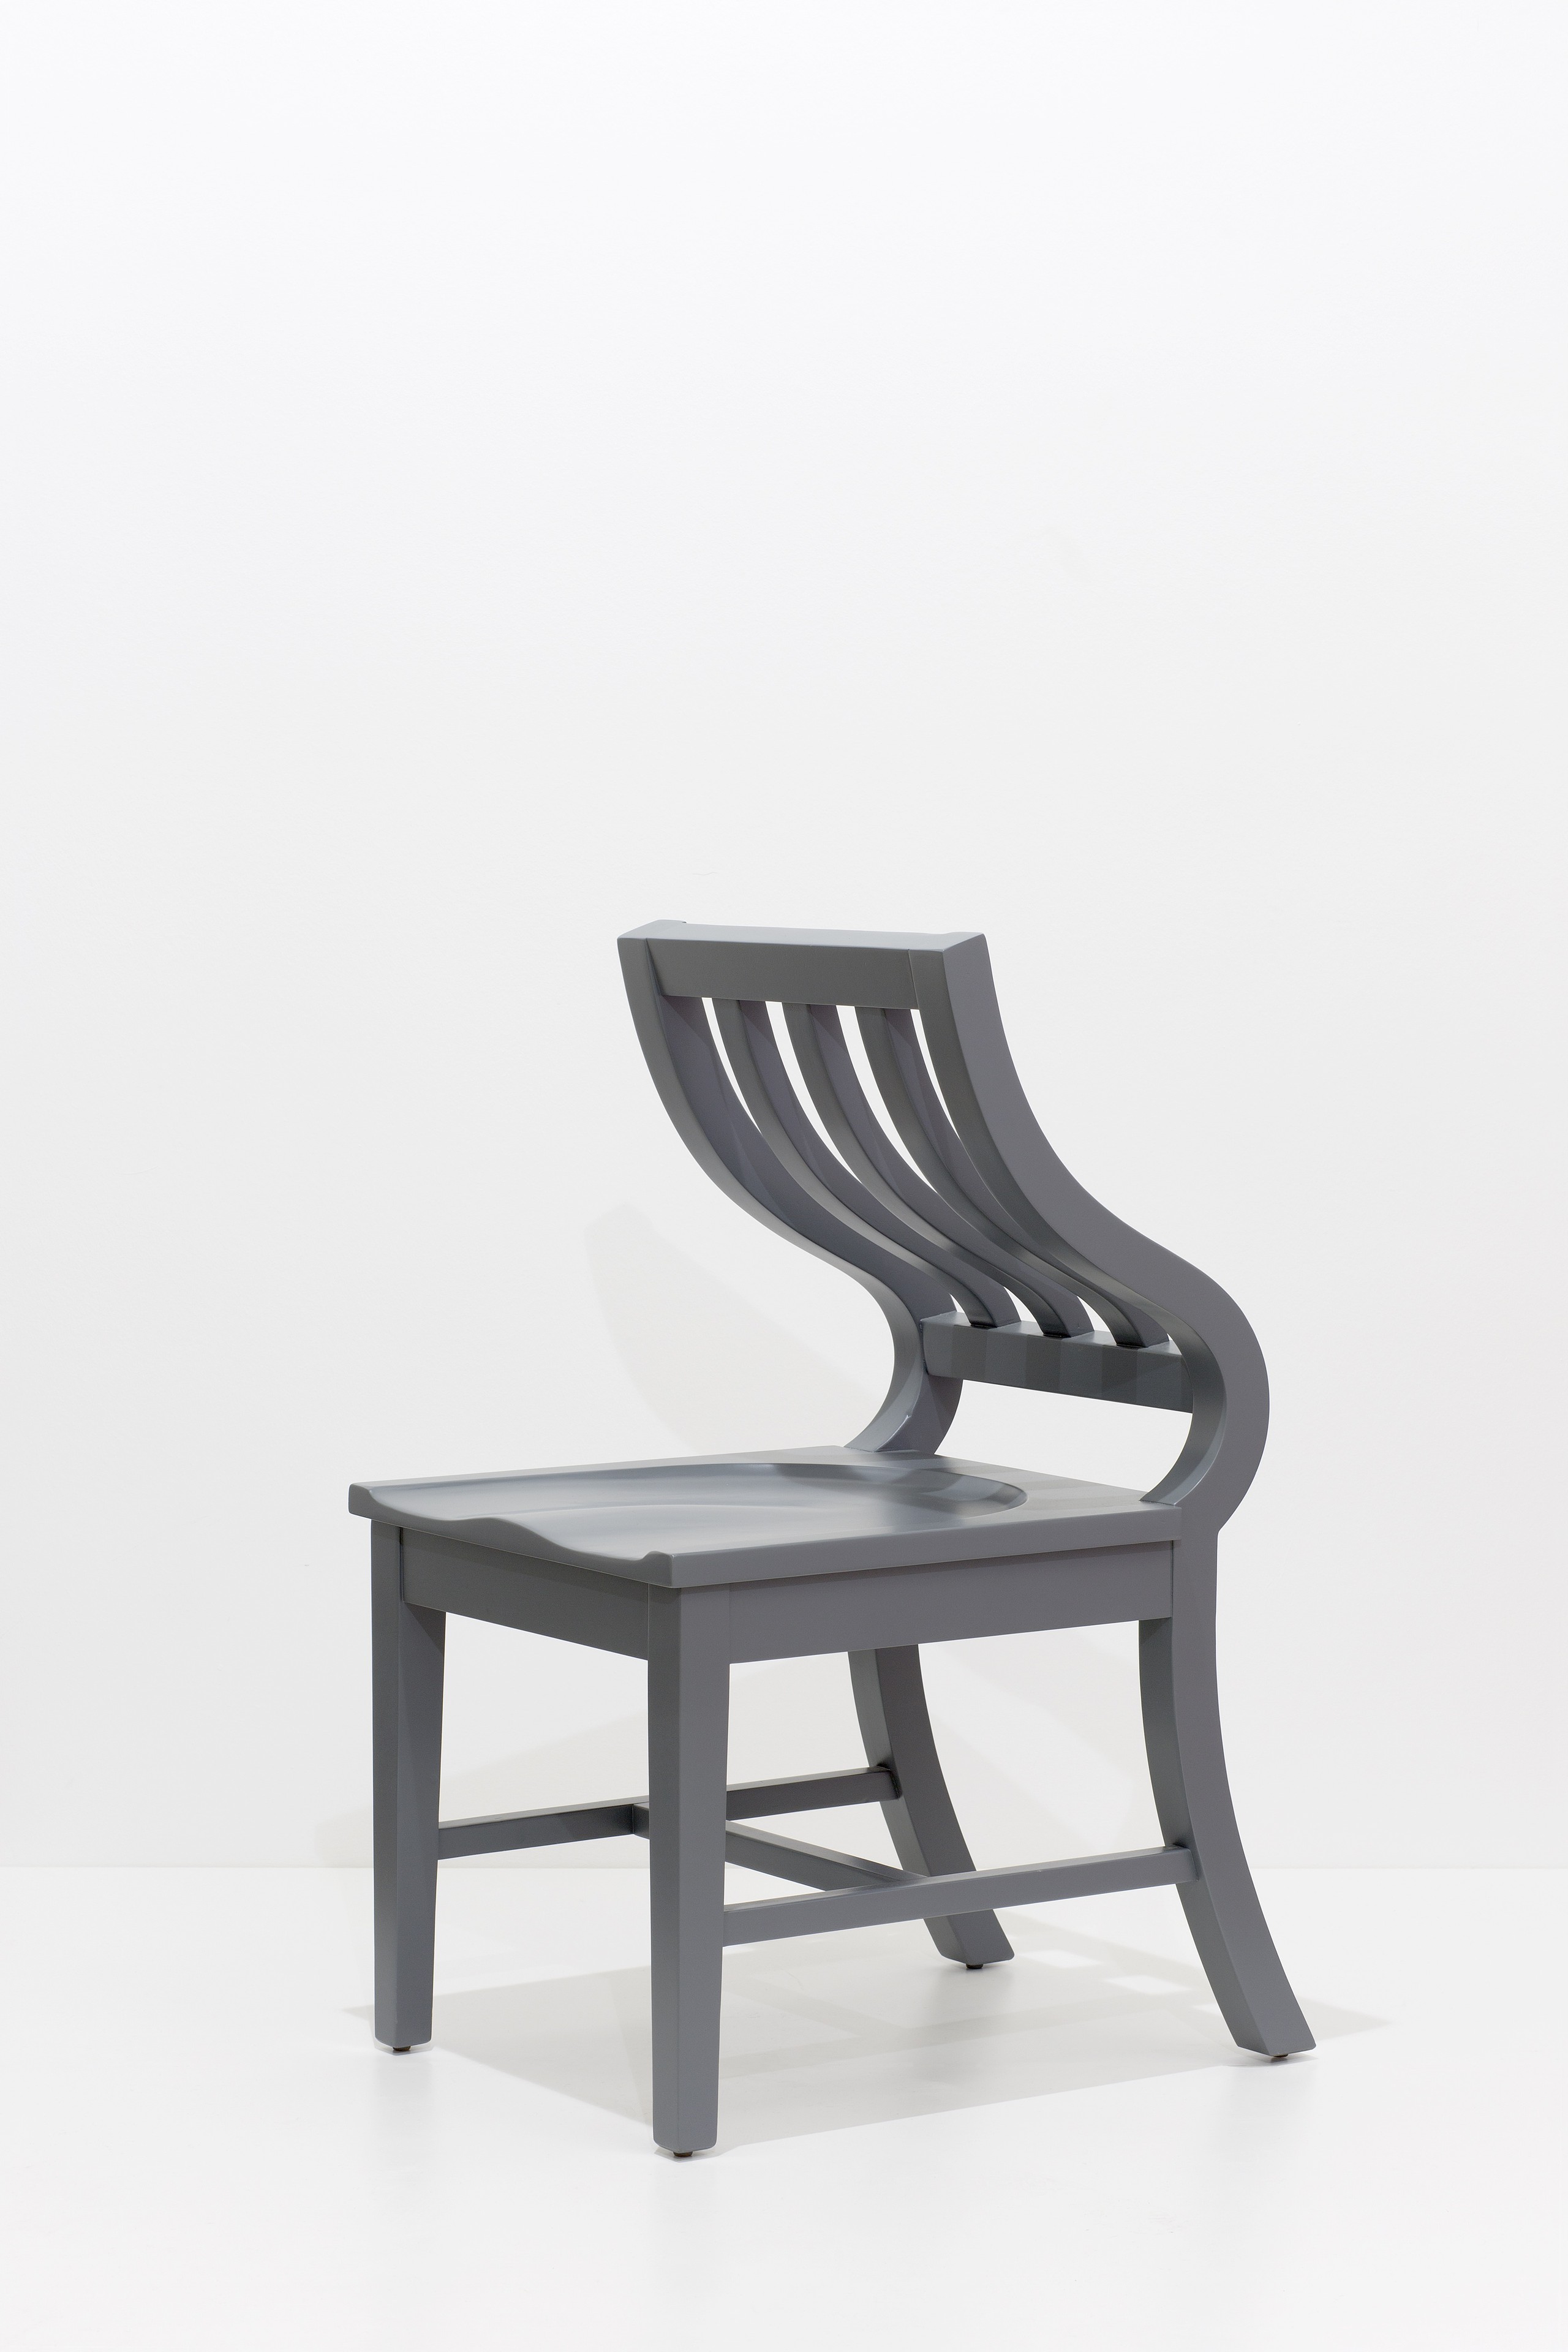 Bunny Rogers, Sad Chair I, 2015, Wood, grey paint, 92 x 48.3 x 58 cm, 36 1/2 x 19 1/2 x 23 in